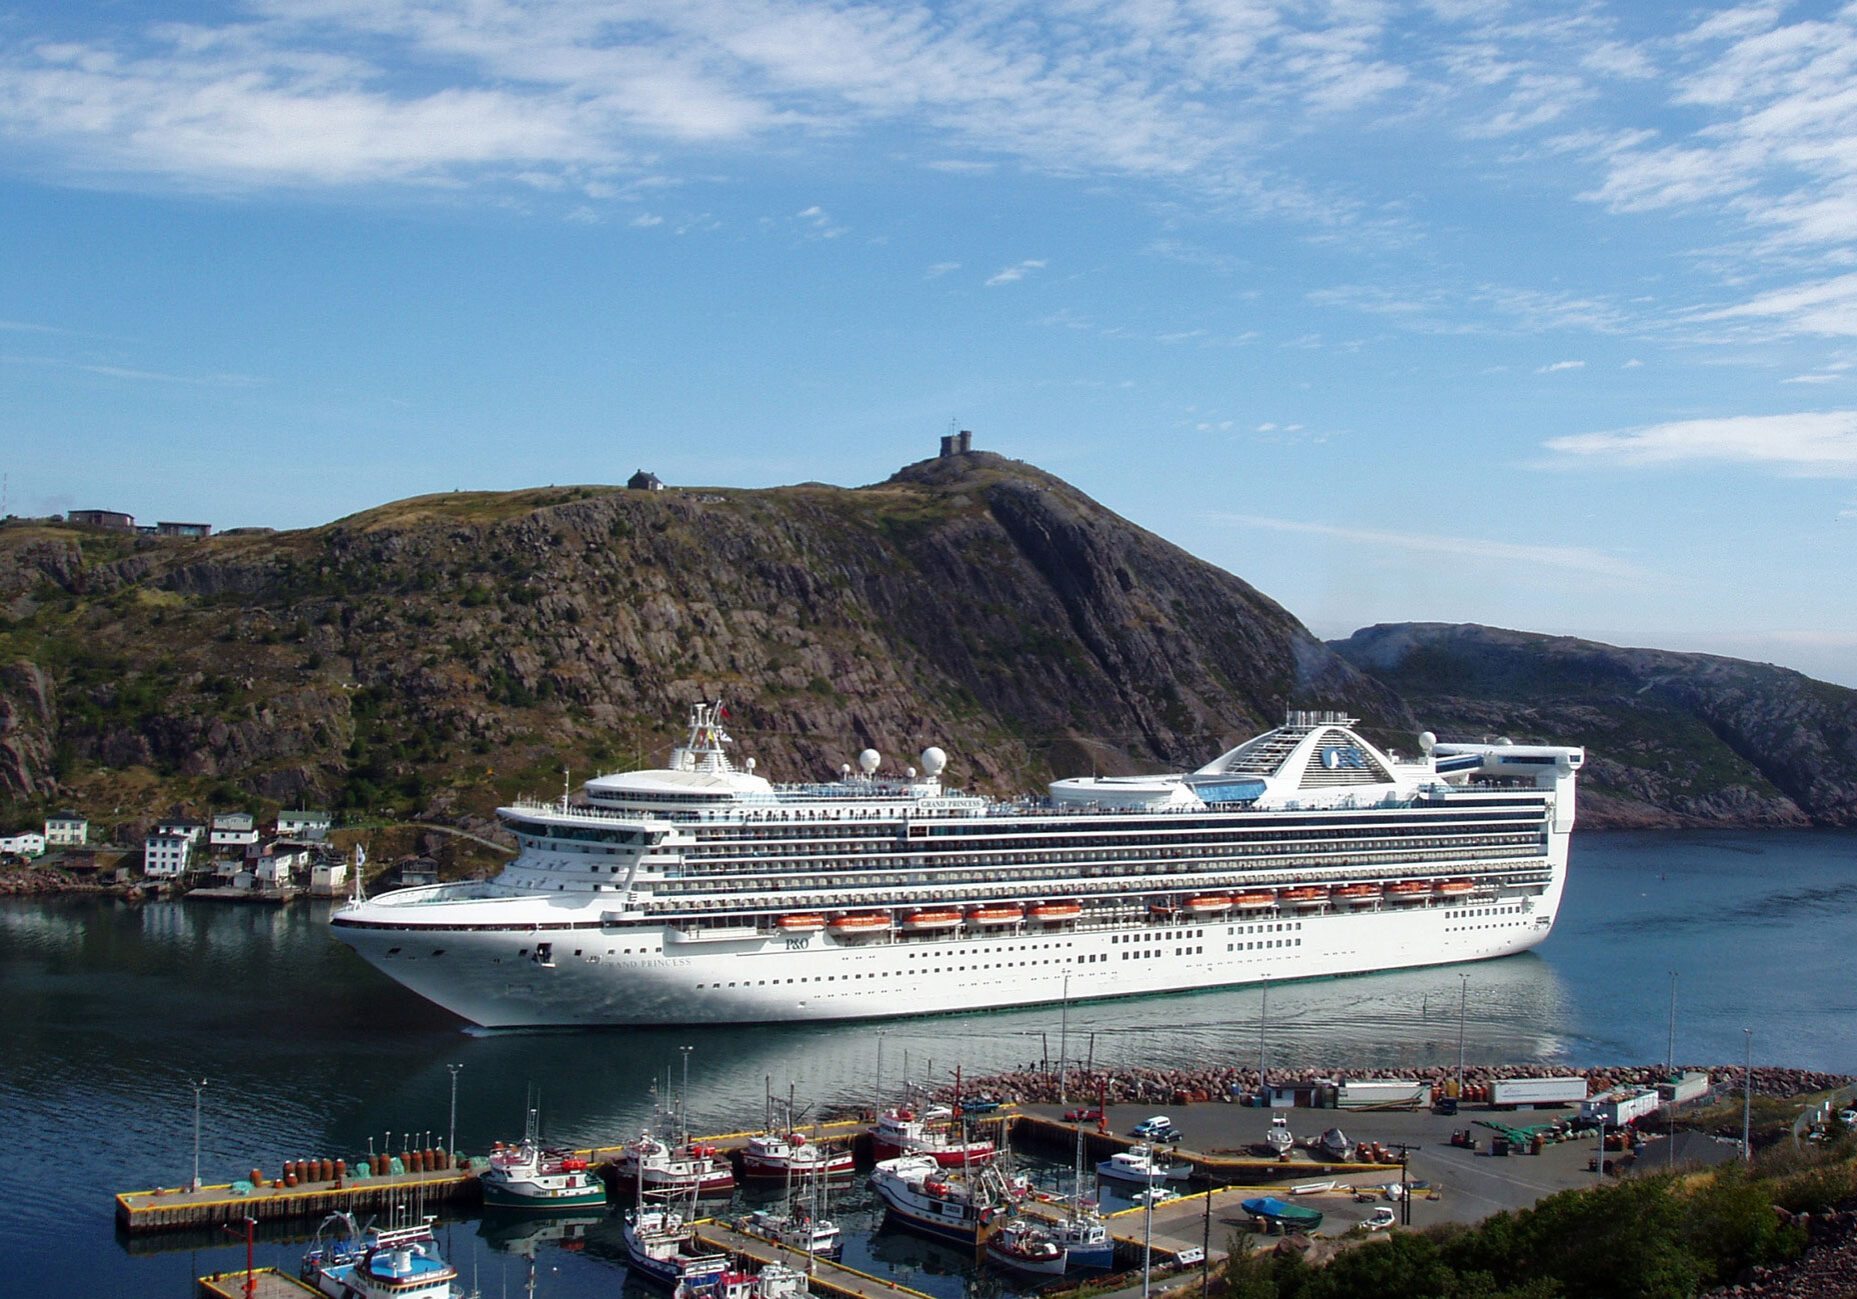 Cruise Ship Tours